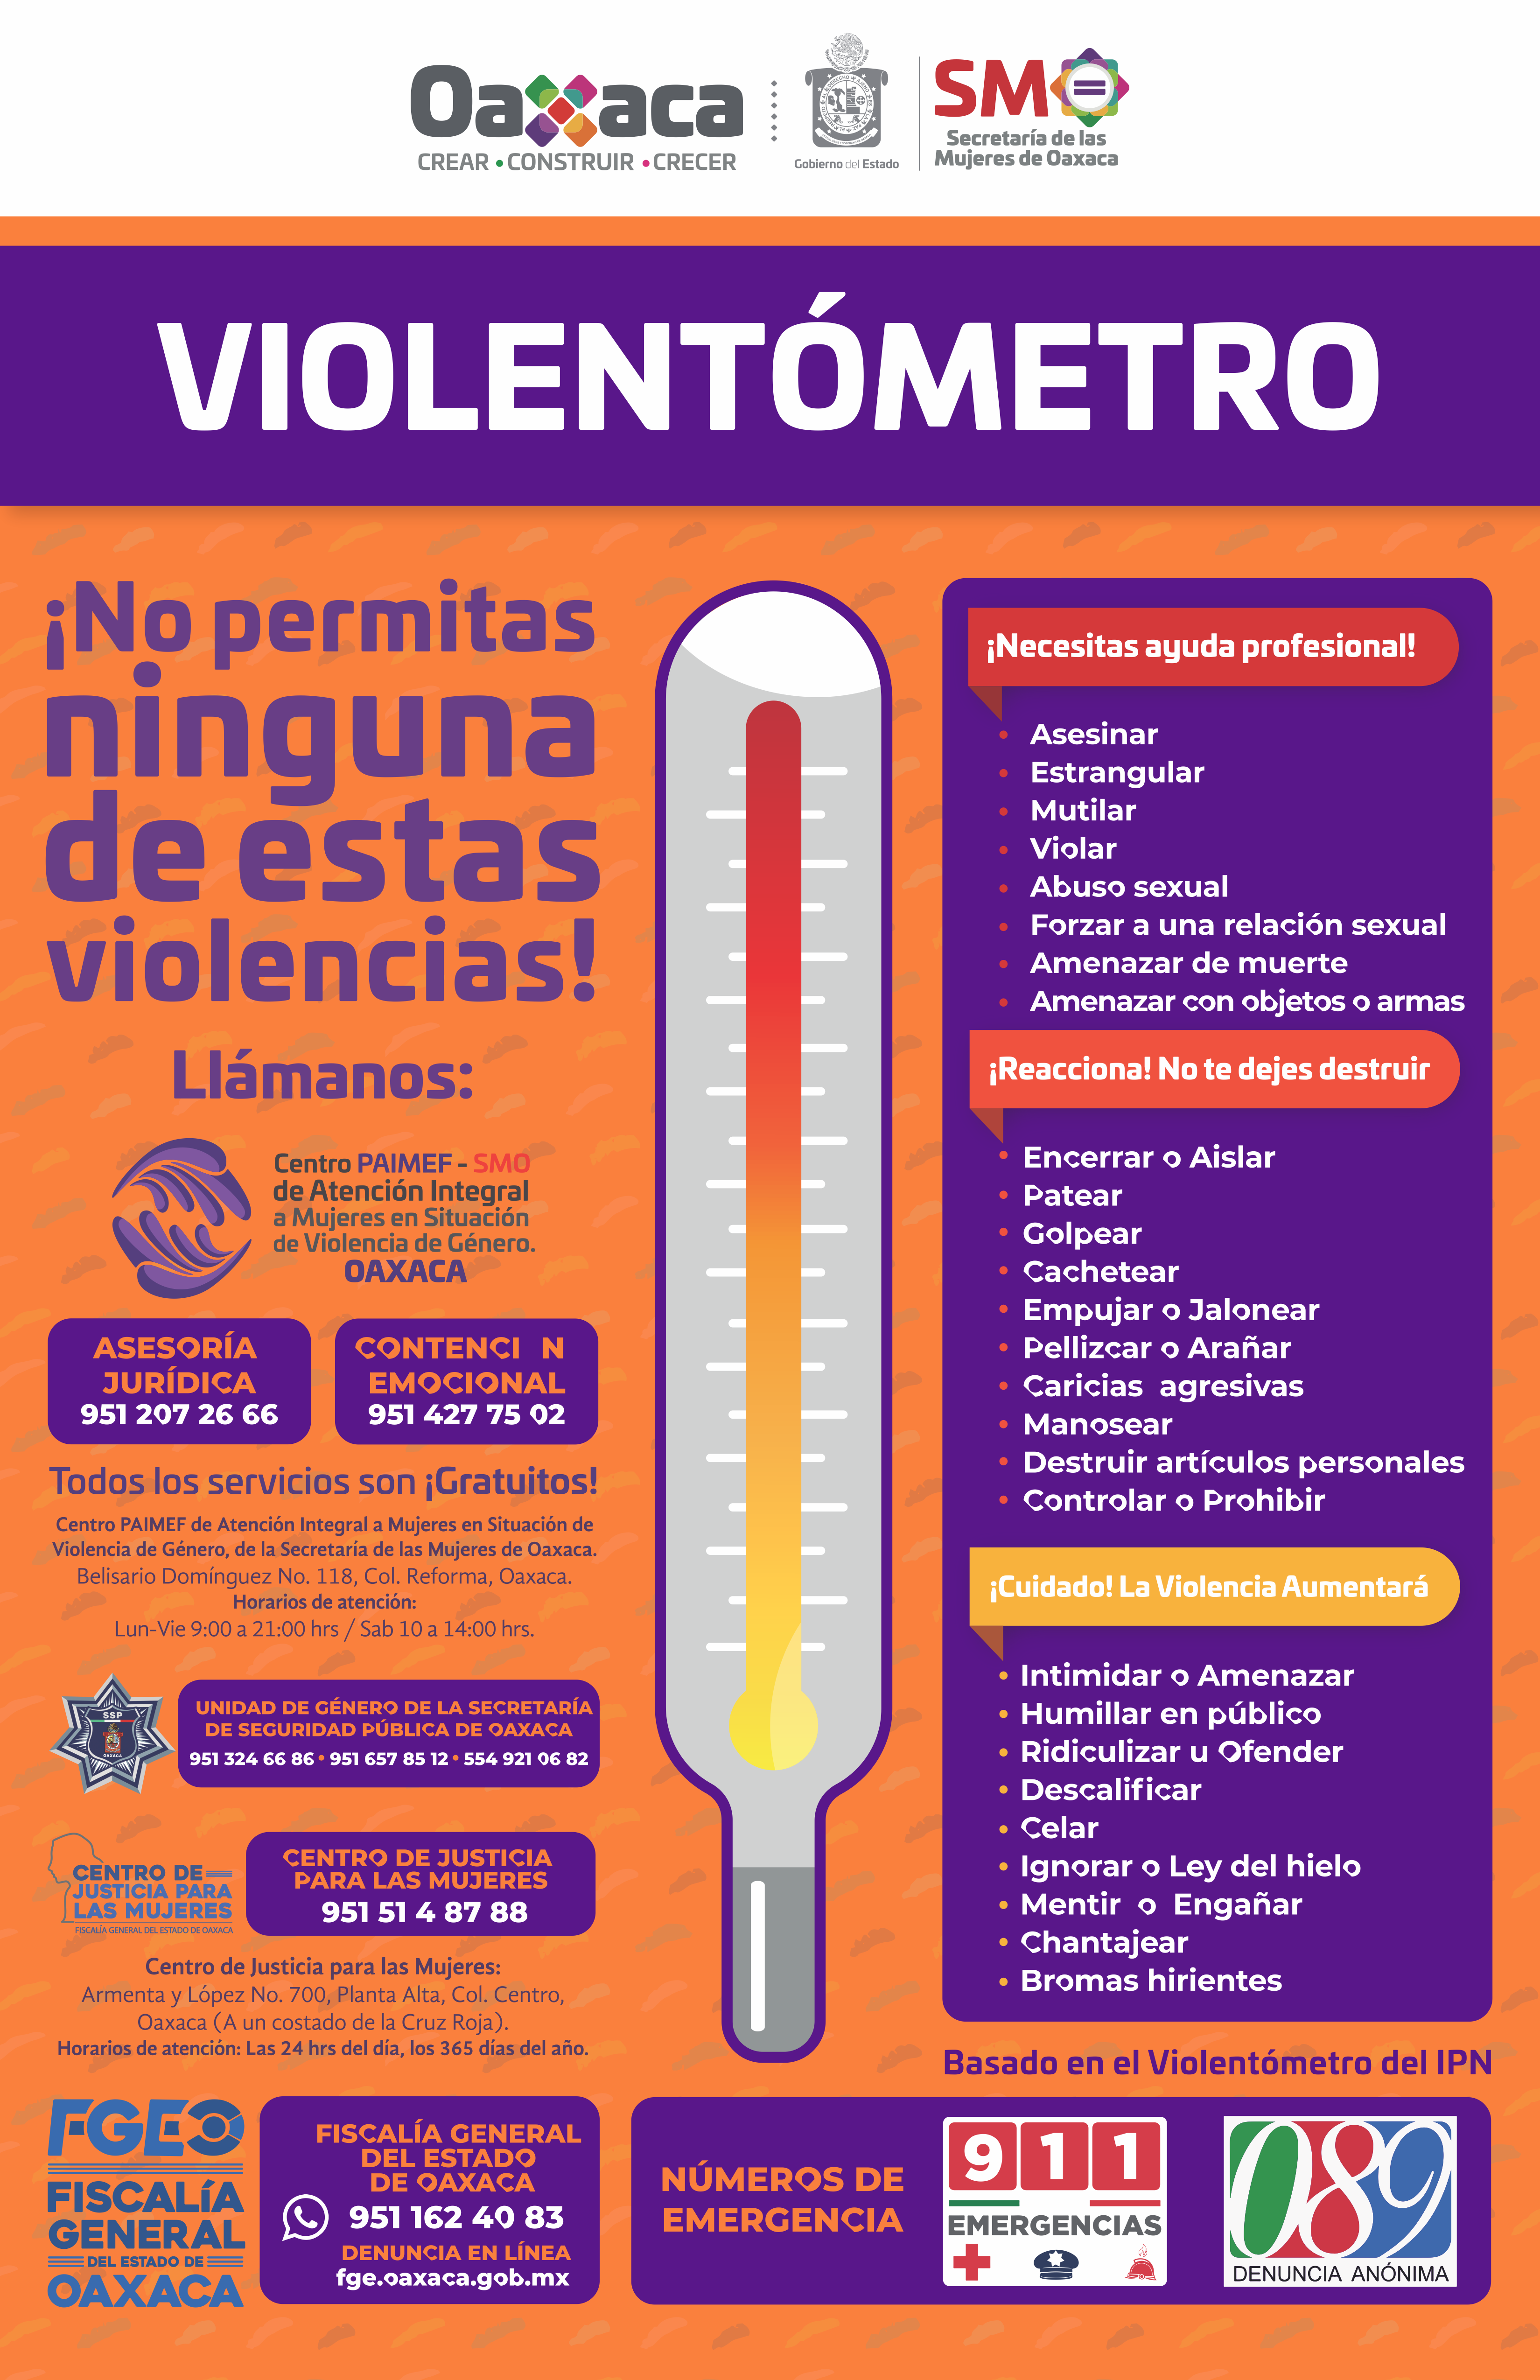 Violentometro Oaxaca